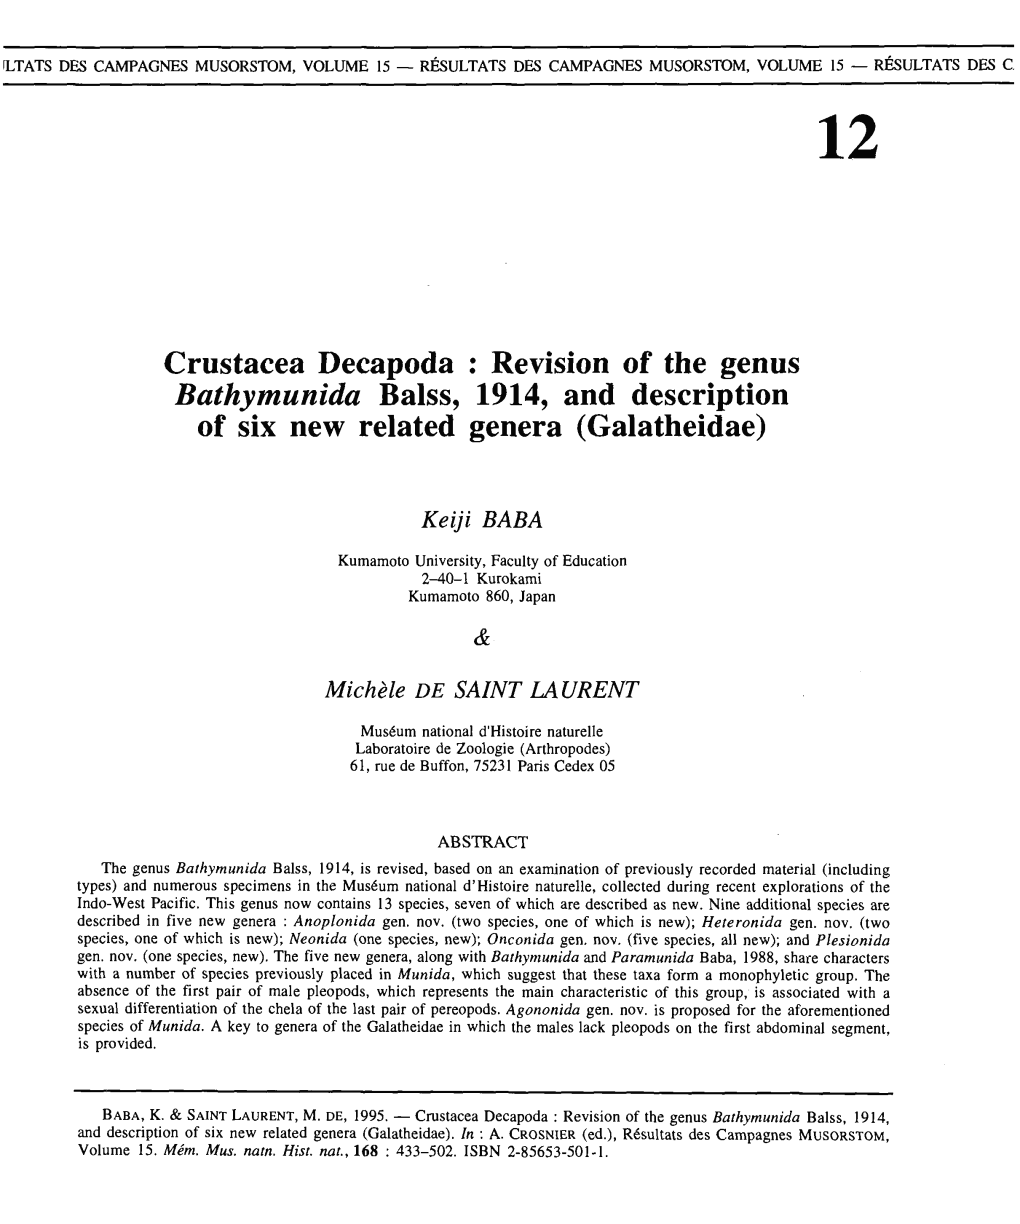 Revision of the Genus Bathymunida Balss, 1914, and Description of Six New Related Genera (Galatheidae)